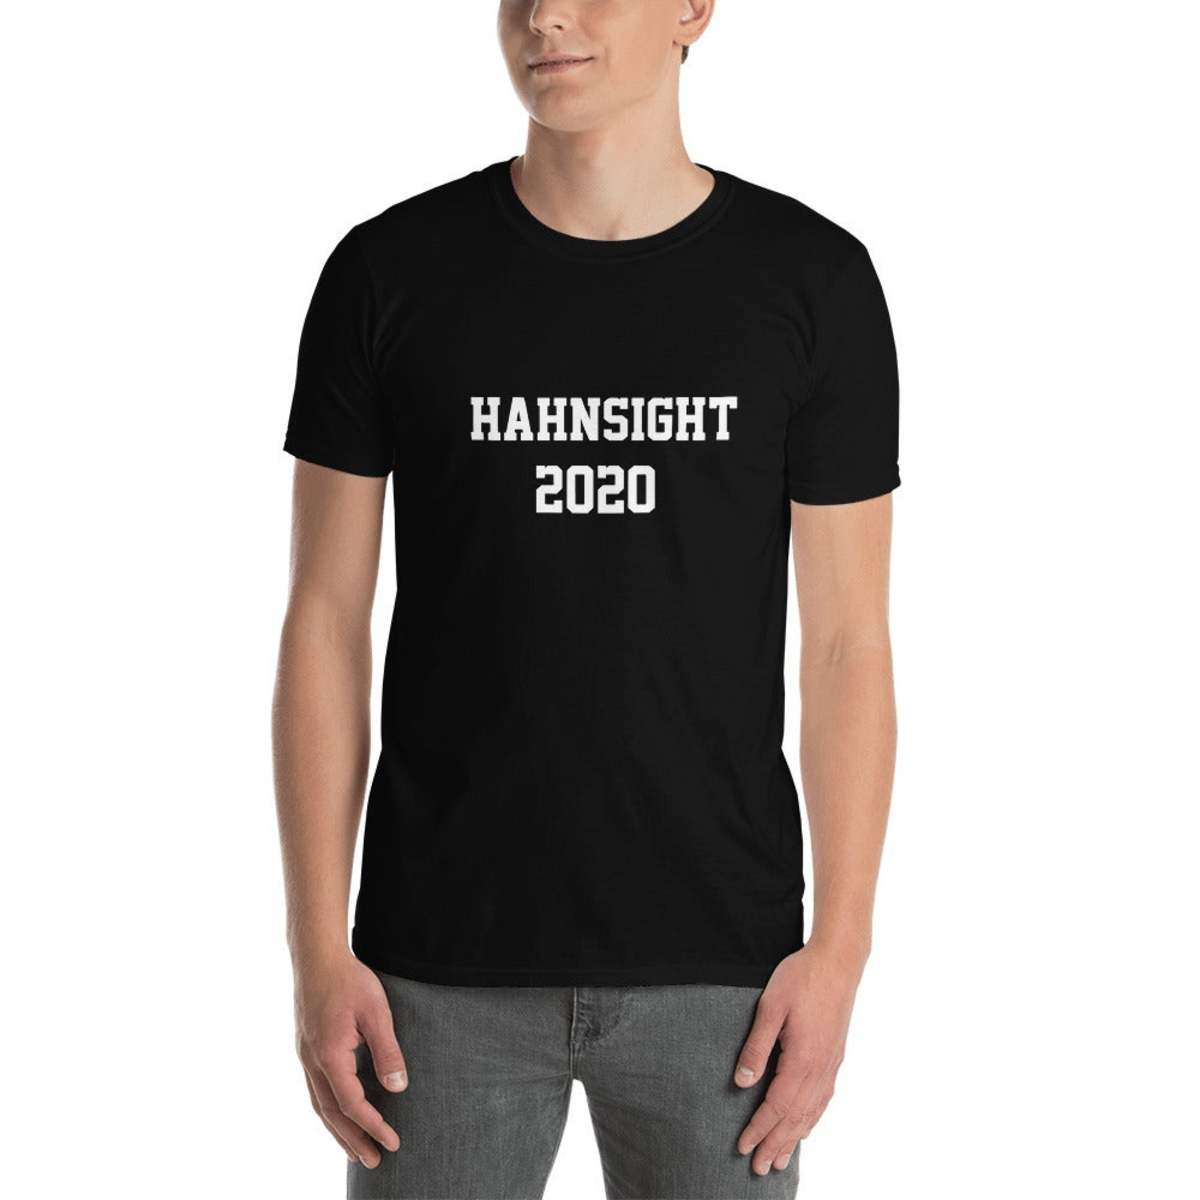 hahnsight-shirt